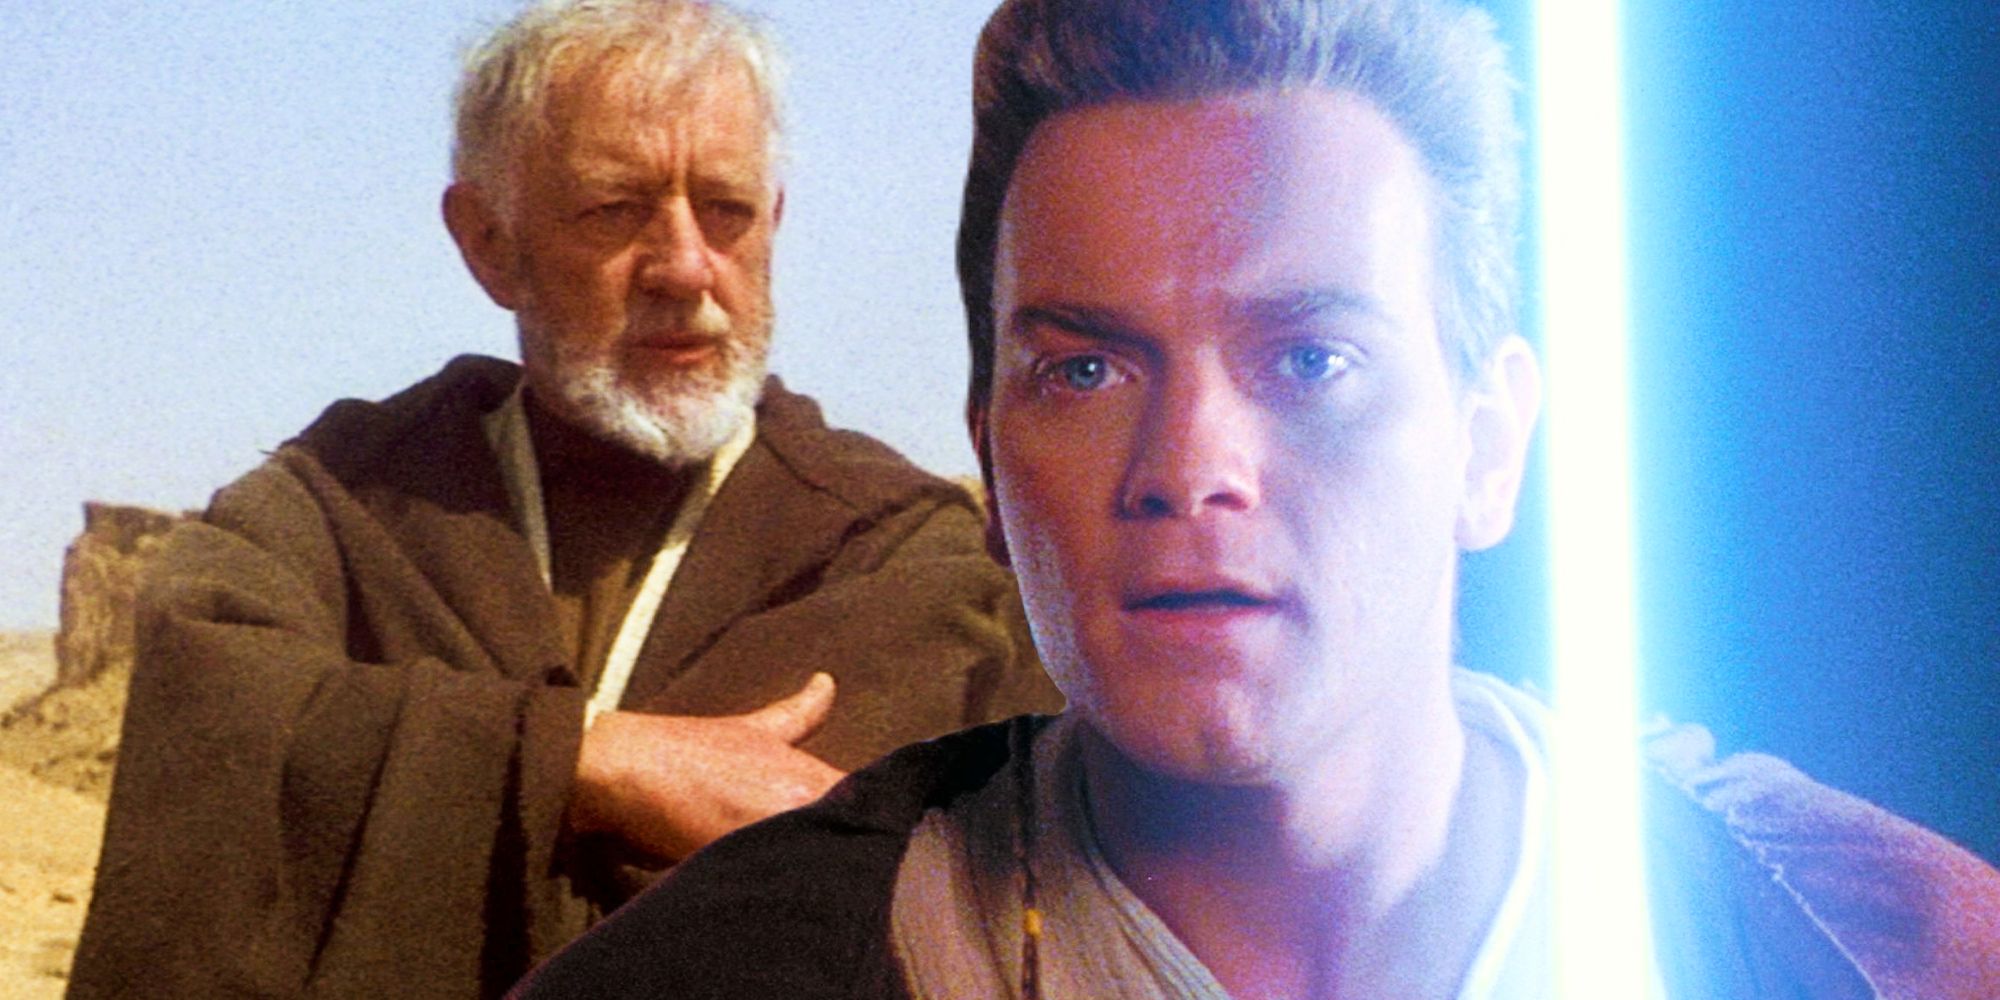 Obi-Wan Kenobi in A New Hope and The Phantom Menace